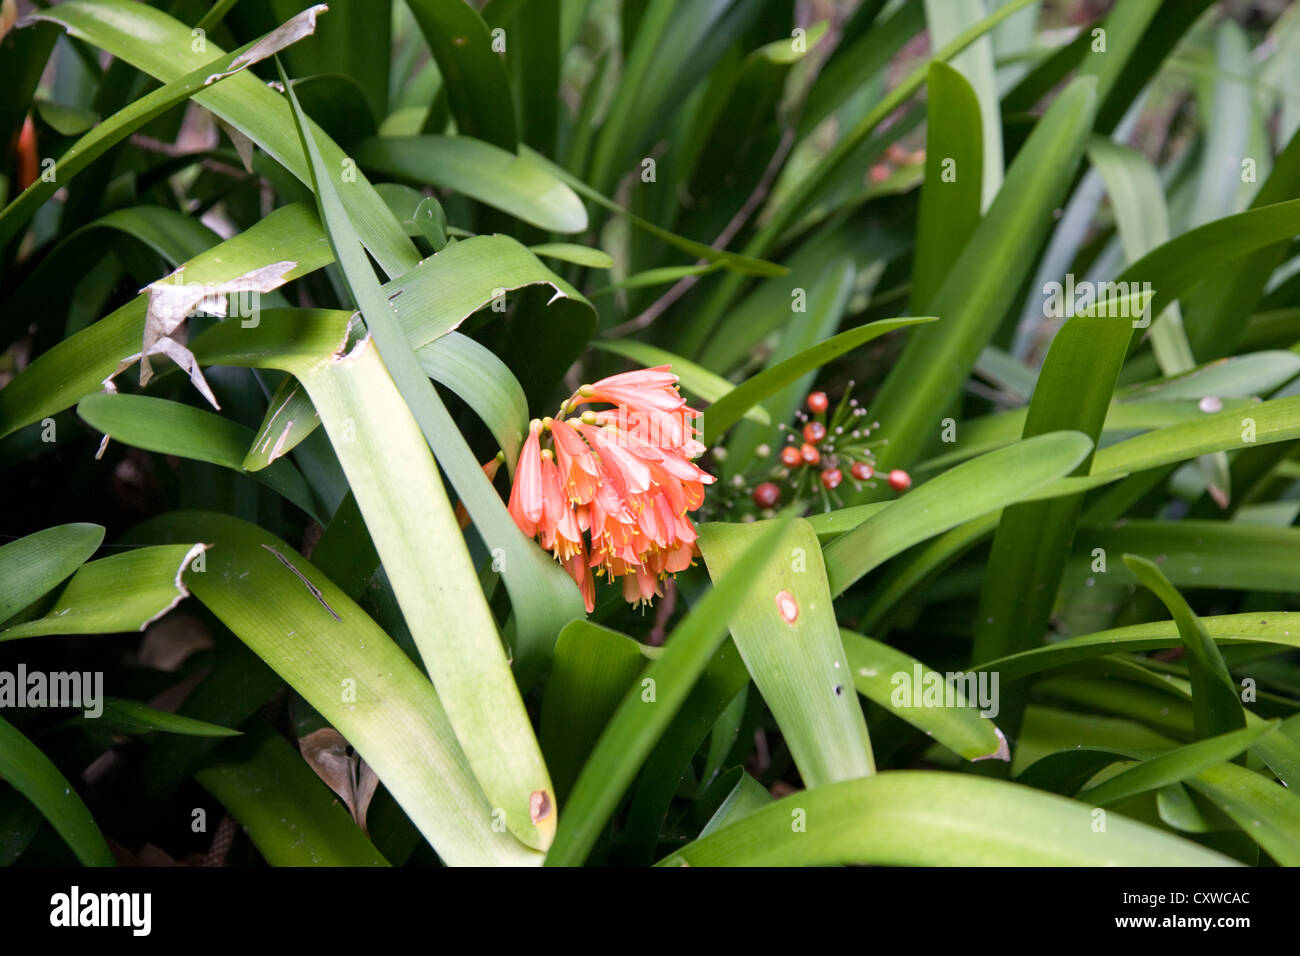 Clivia pianta o kaffir lily con fiori arancione Foto Stock